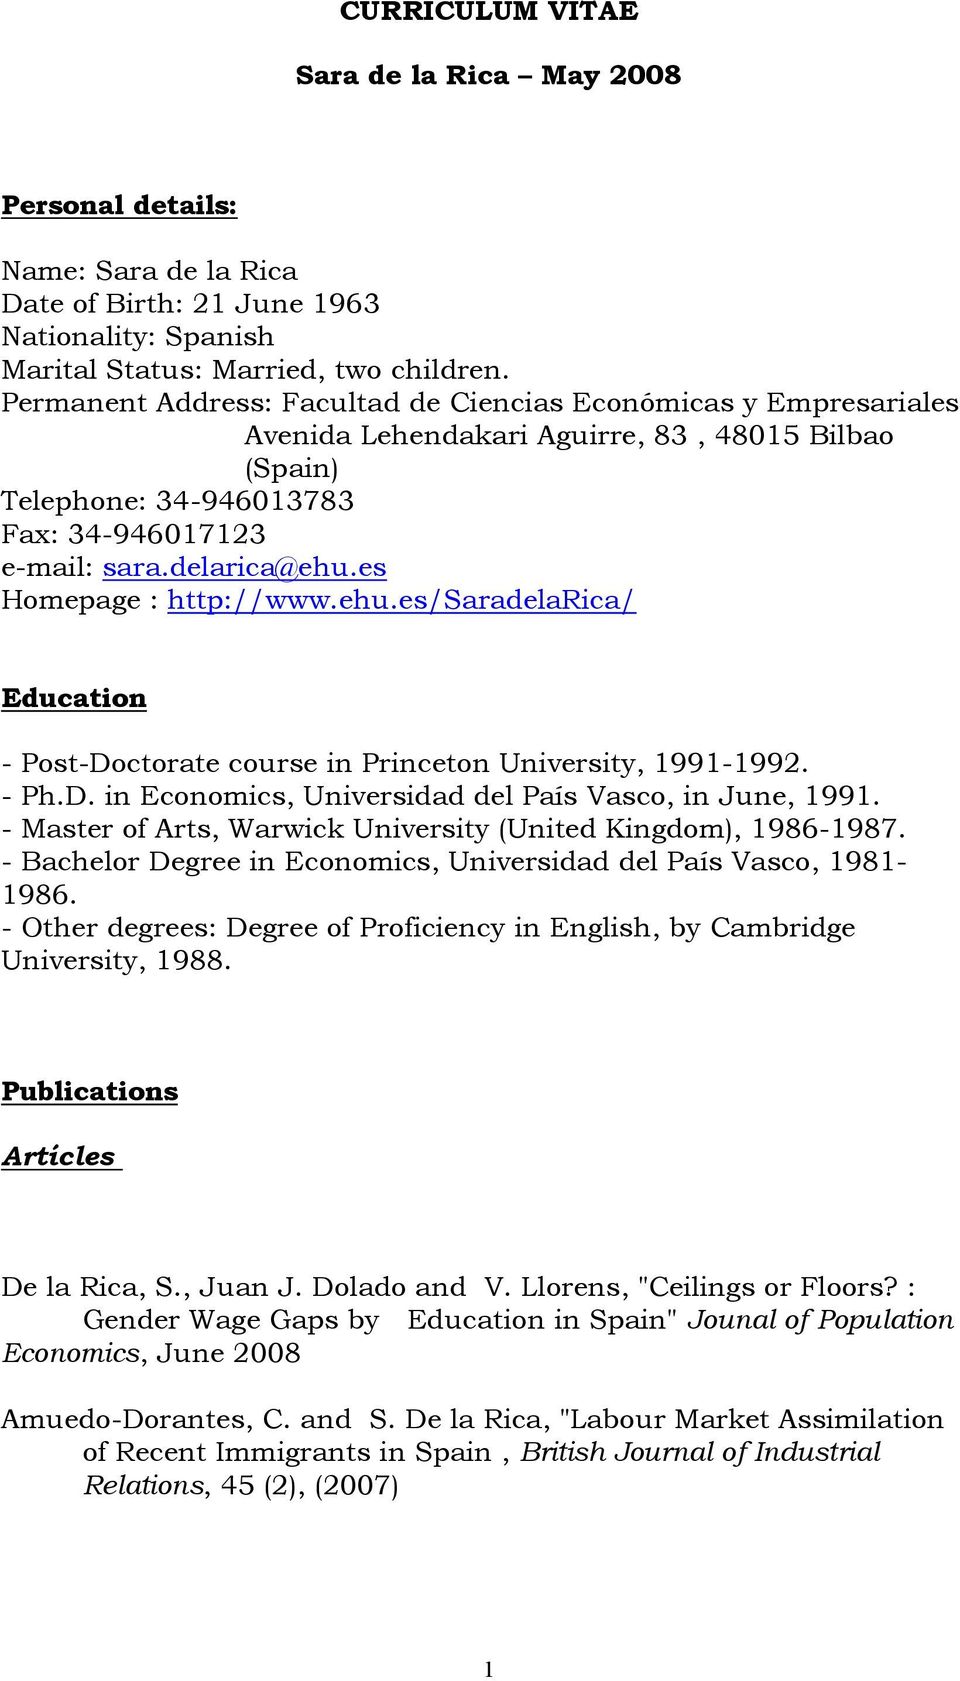 es Homepage : http://www.ehu.es/saradelarica/ Education - Post-Doctorate course in Princeton University, 1991-1992. - Ph.D. in Economics, Universidad del País Vasco, in June, 1991.